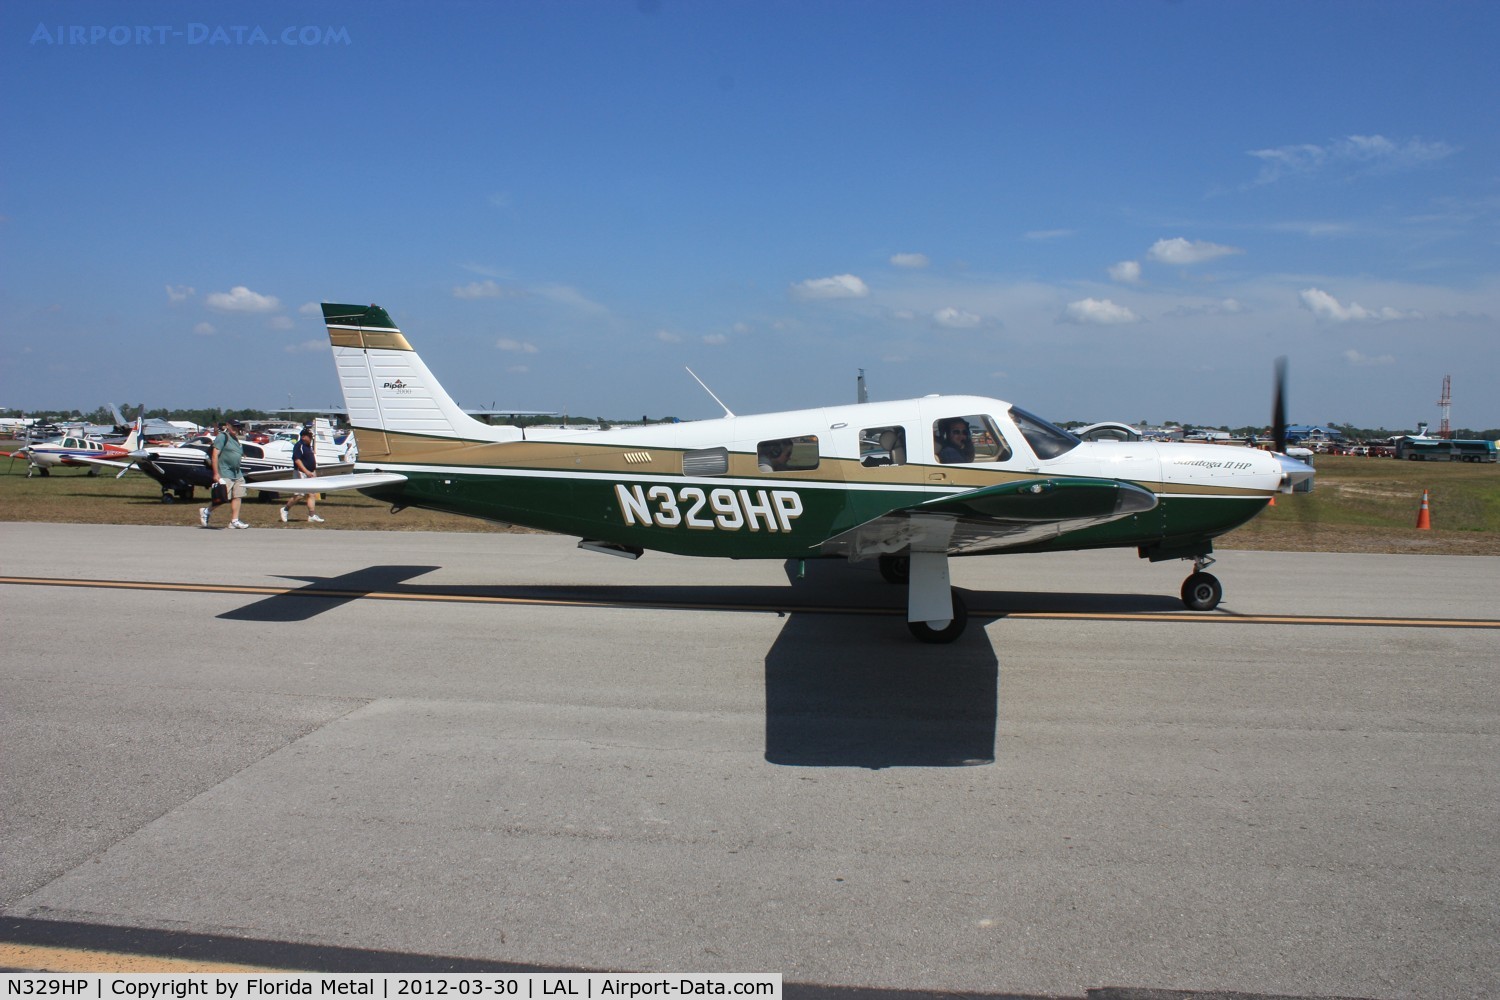 N329HP, 2000 Piper PA-32R-301 C/N 3246166, PA-32R-301